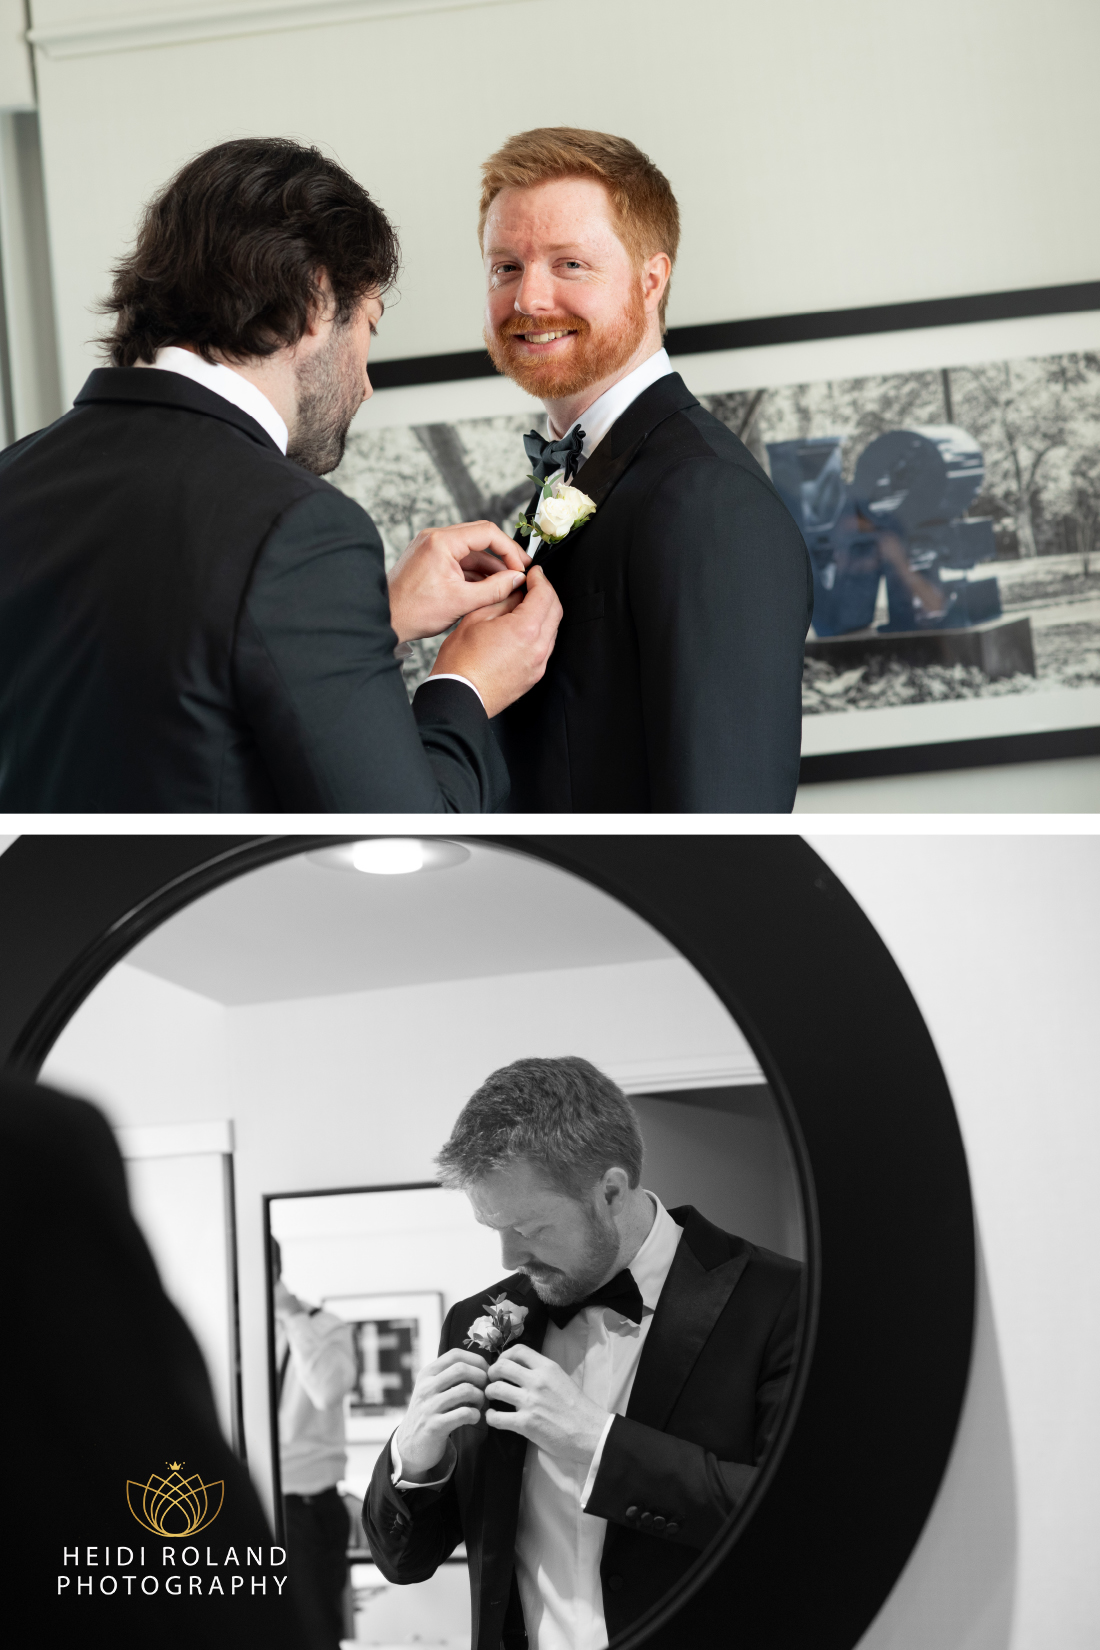 Groom adjusting boutonnière before wedding in Philadelphia